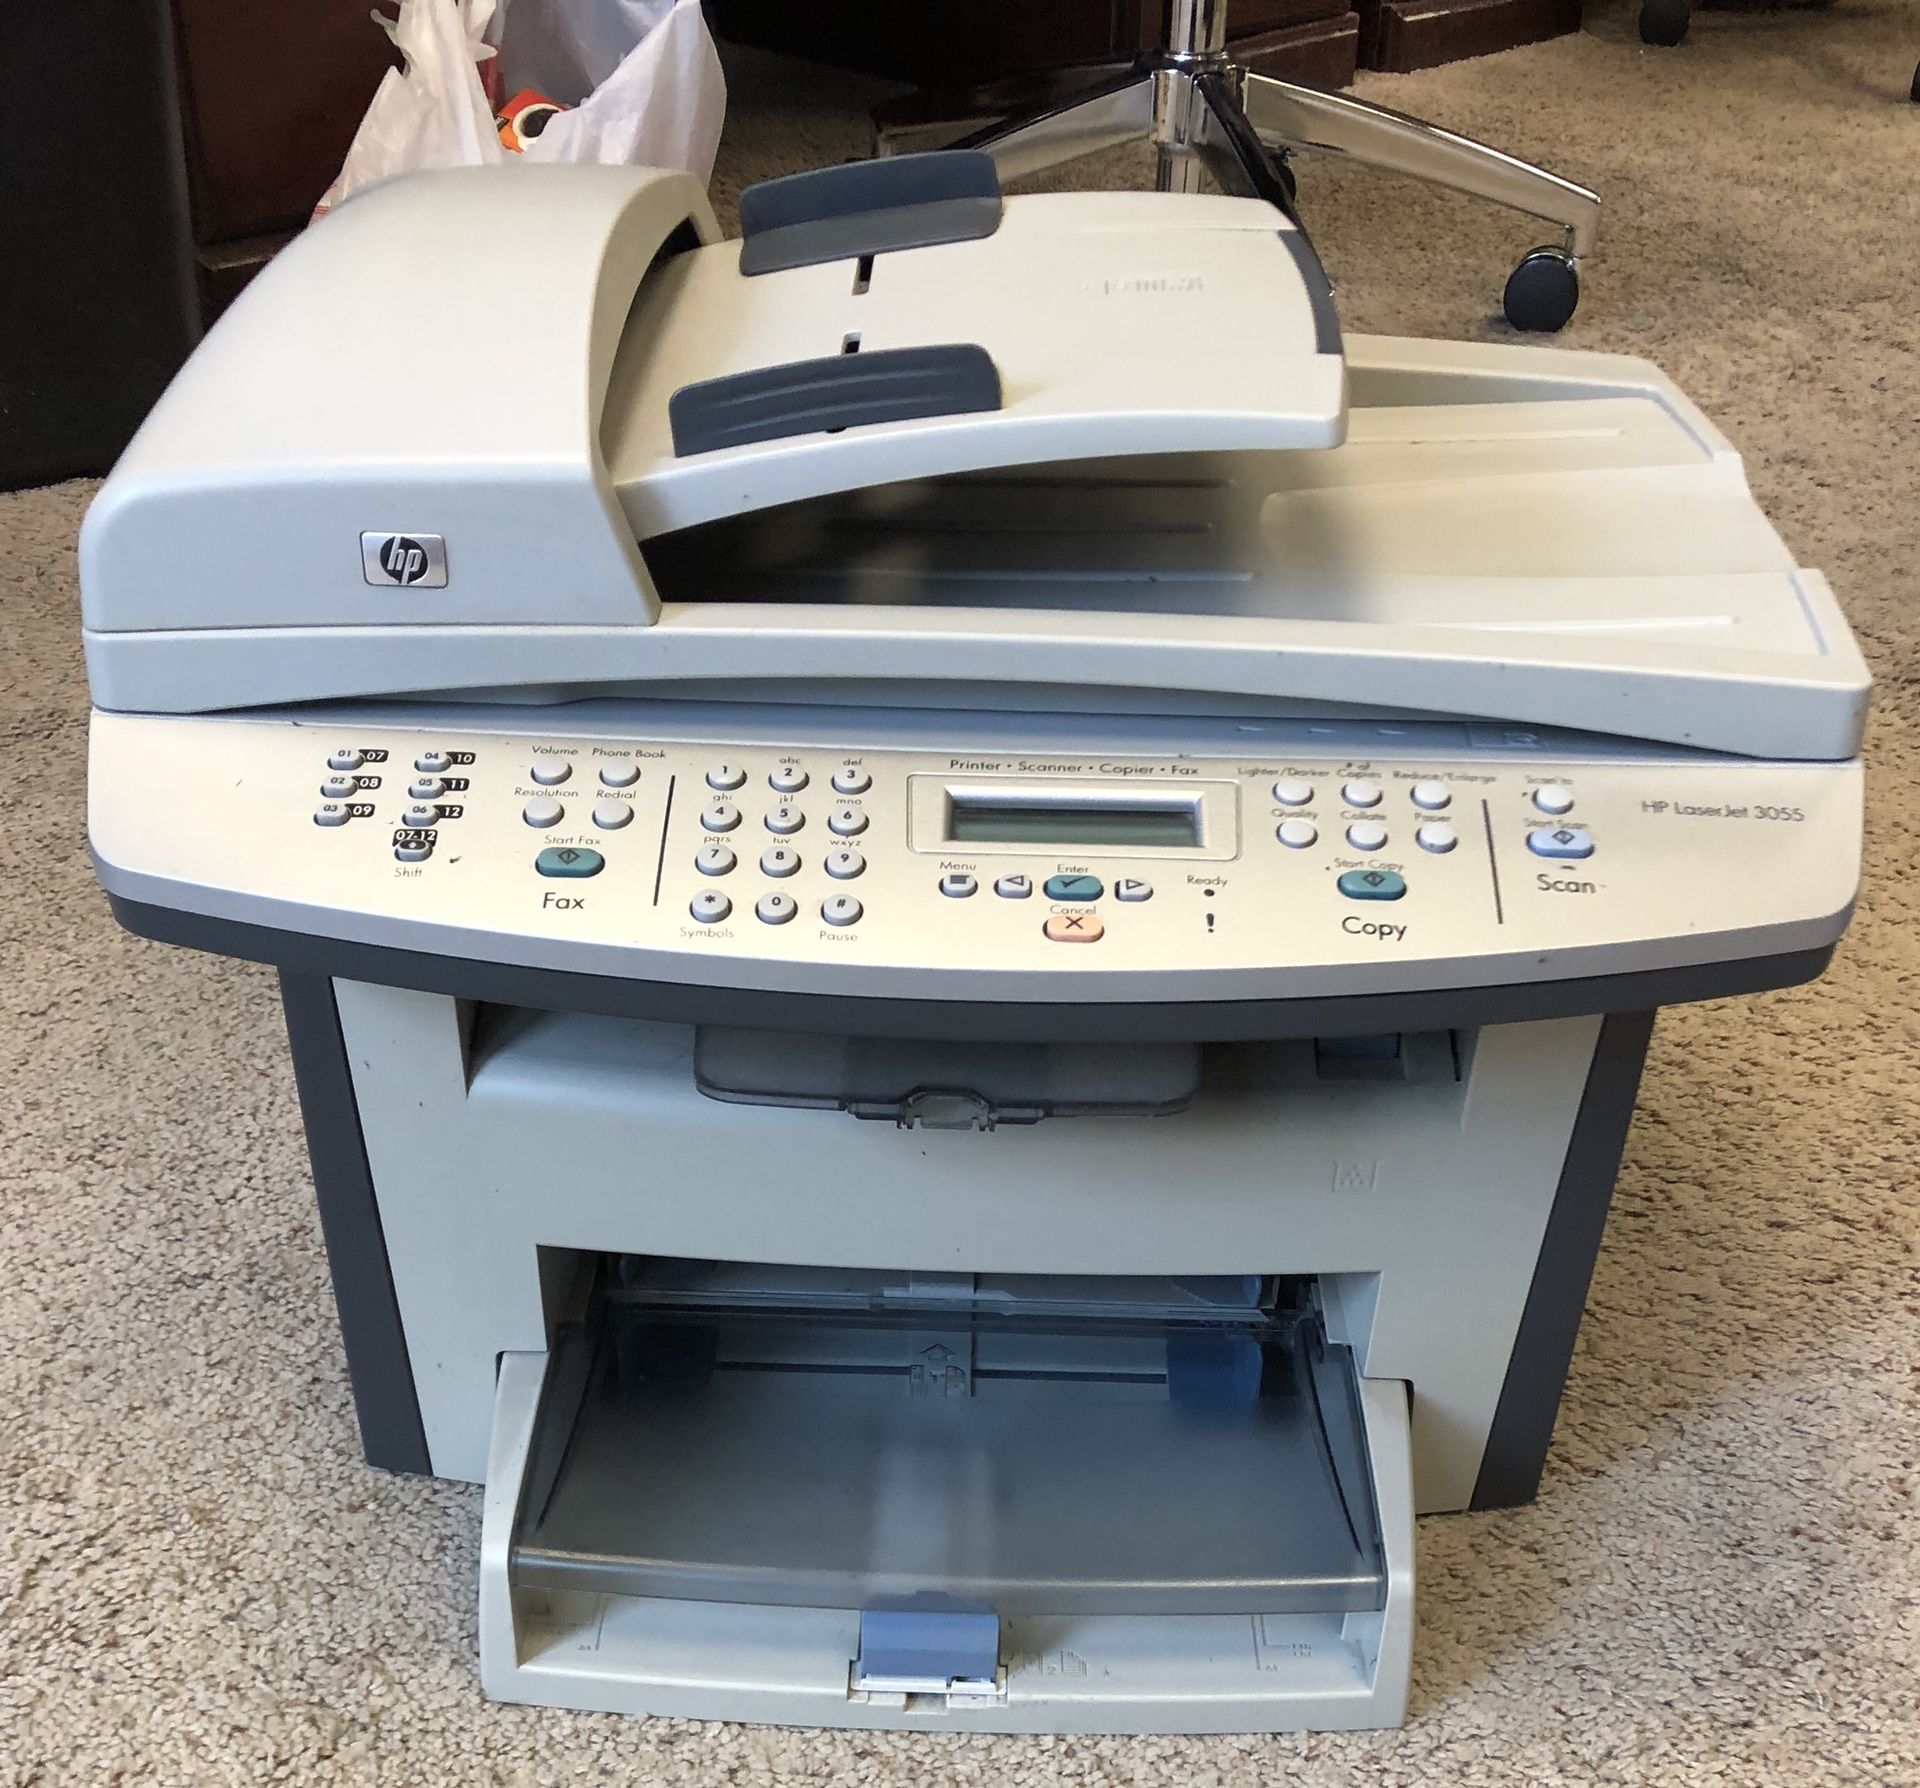 Hewlett-Packard laser printer / fax / copier